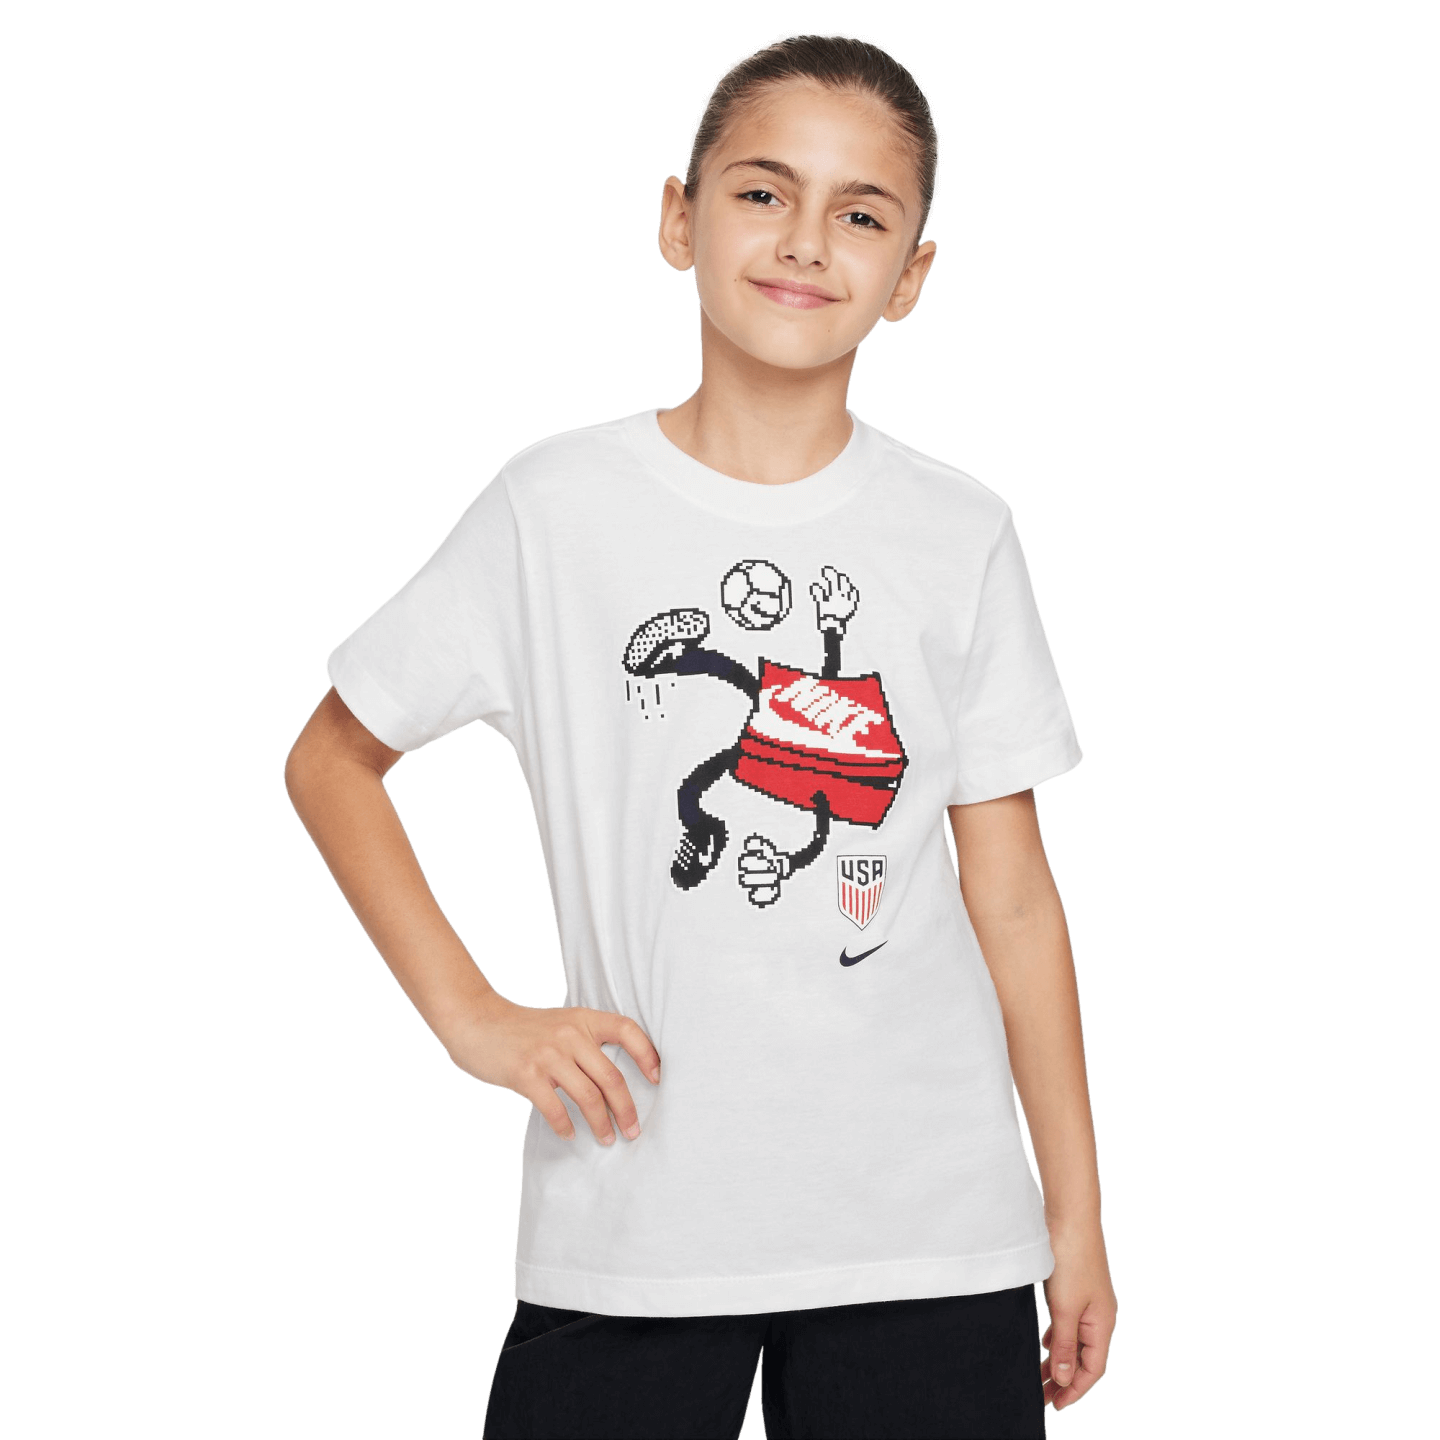 Camiseta juvenil con personaje de Nike USA Shoebox